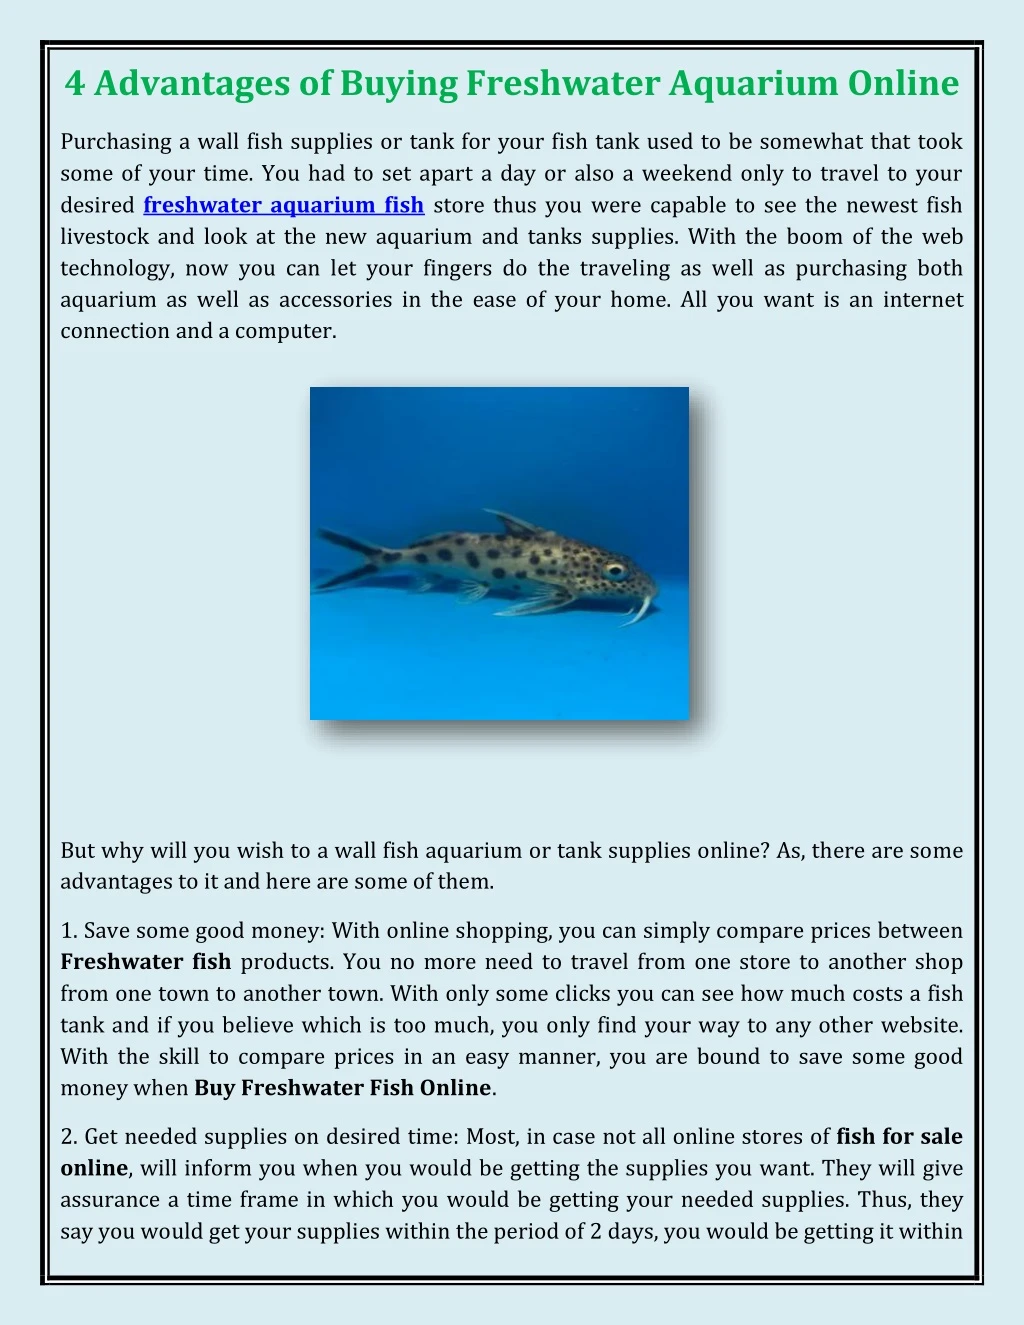 4 advantages of buying freshwater aquarium online